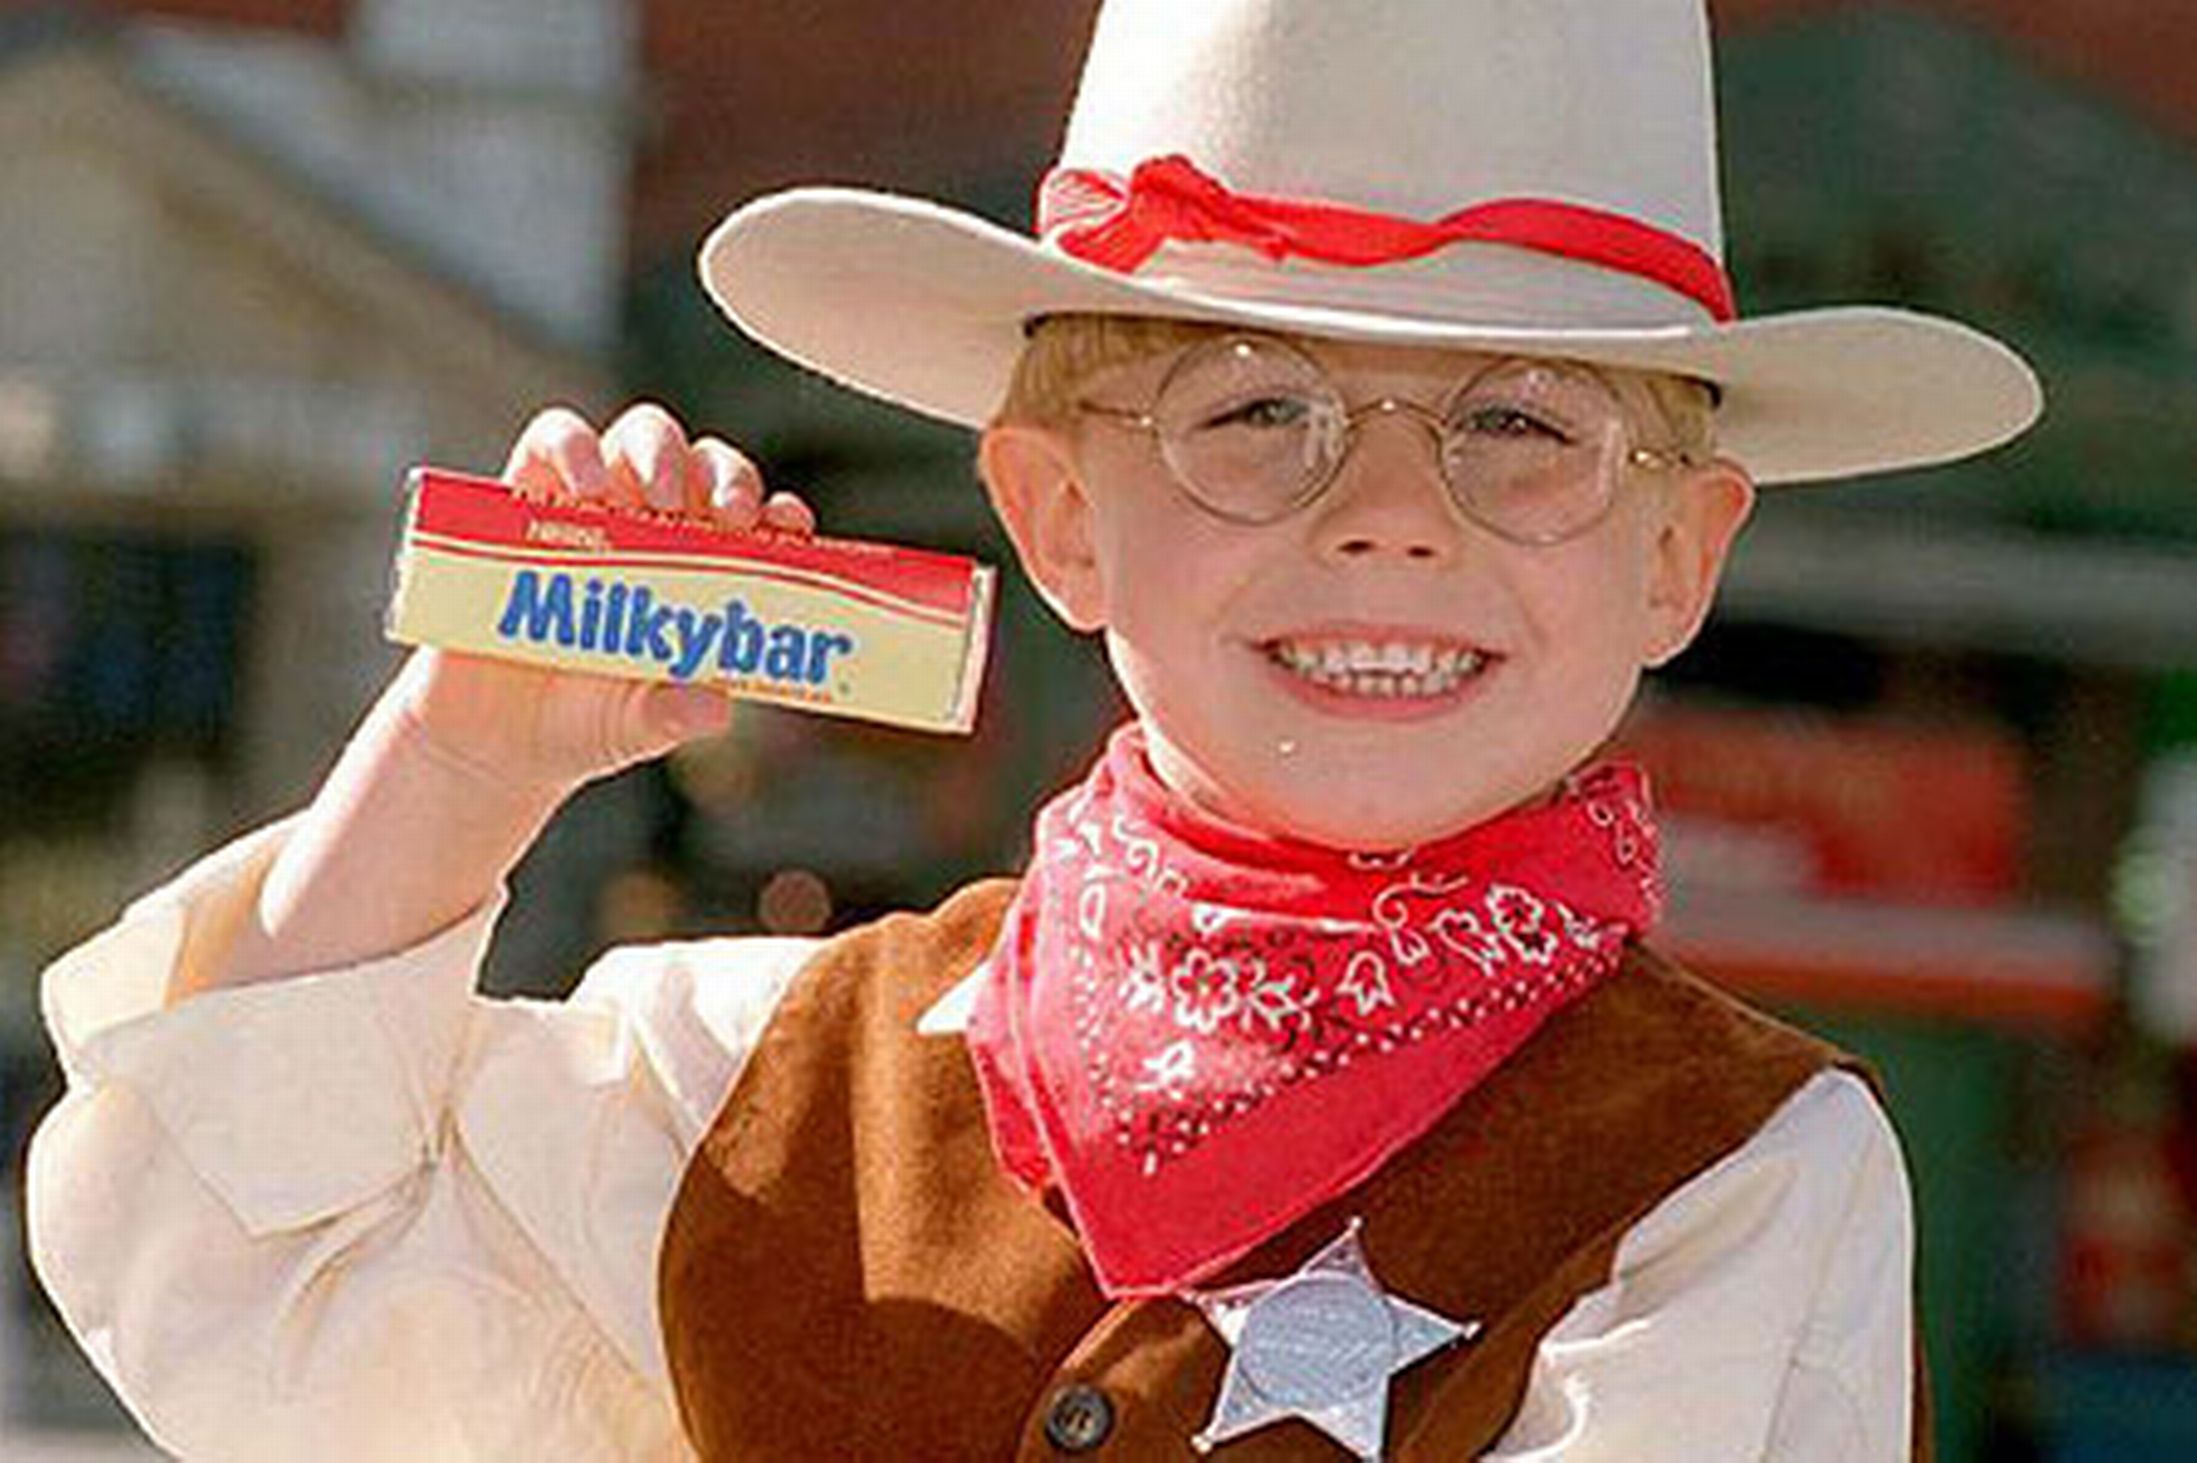 Image result for milky bar kid 80s